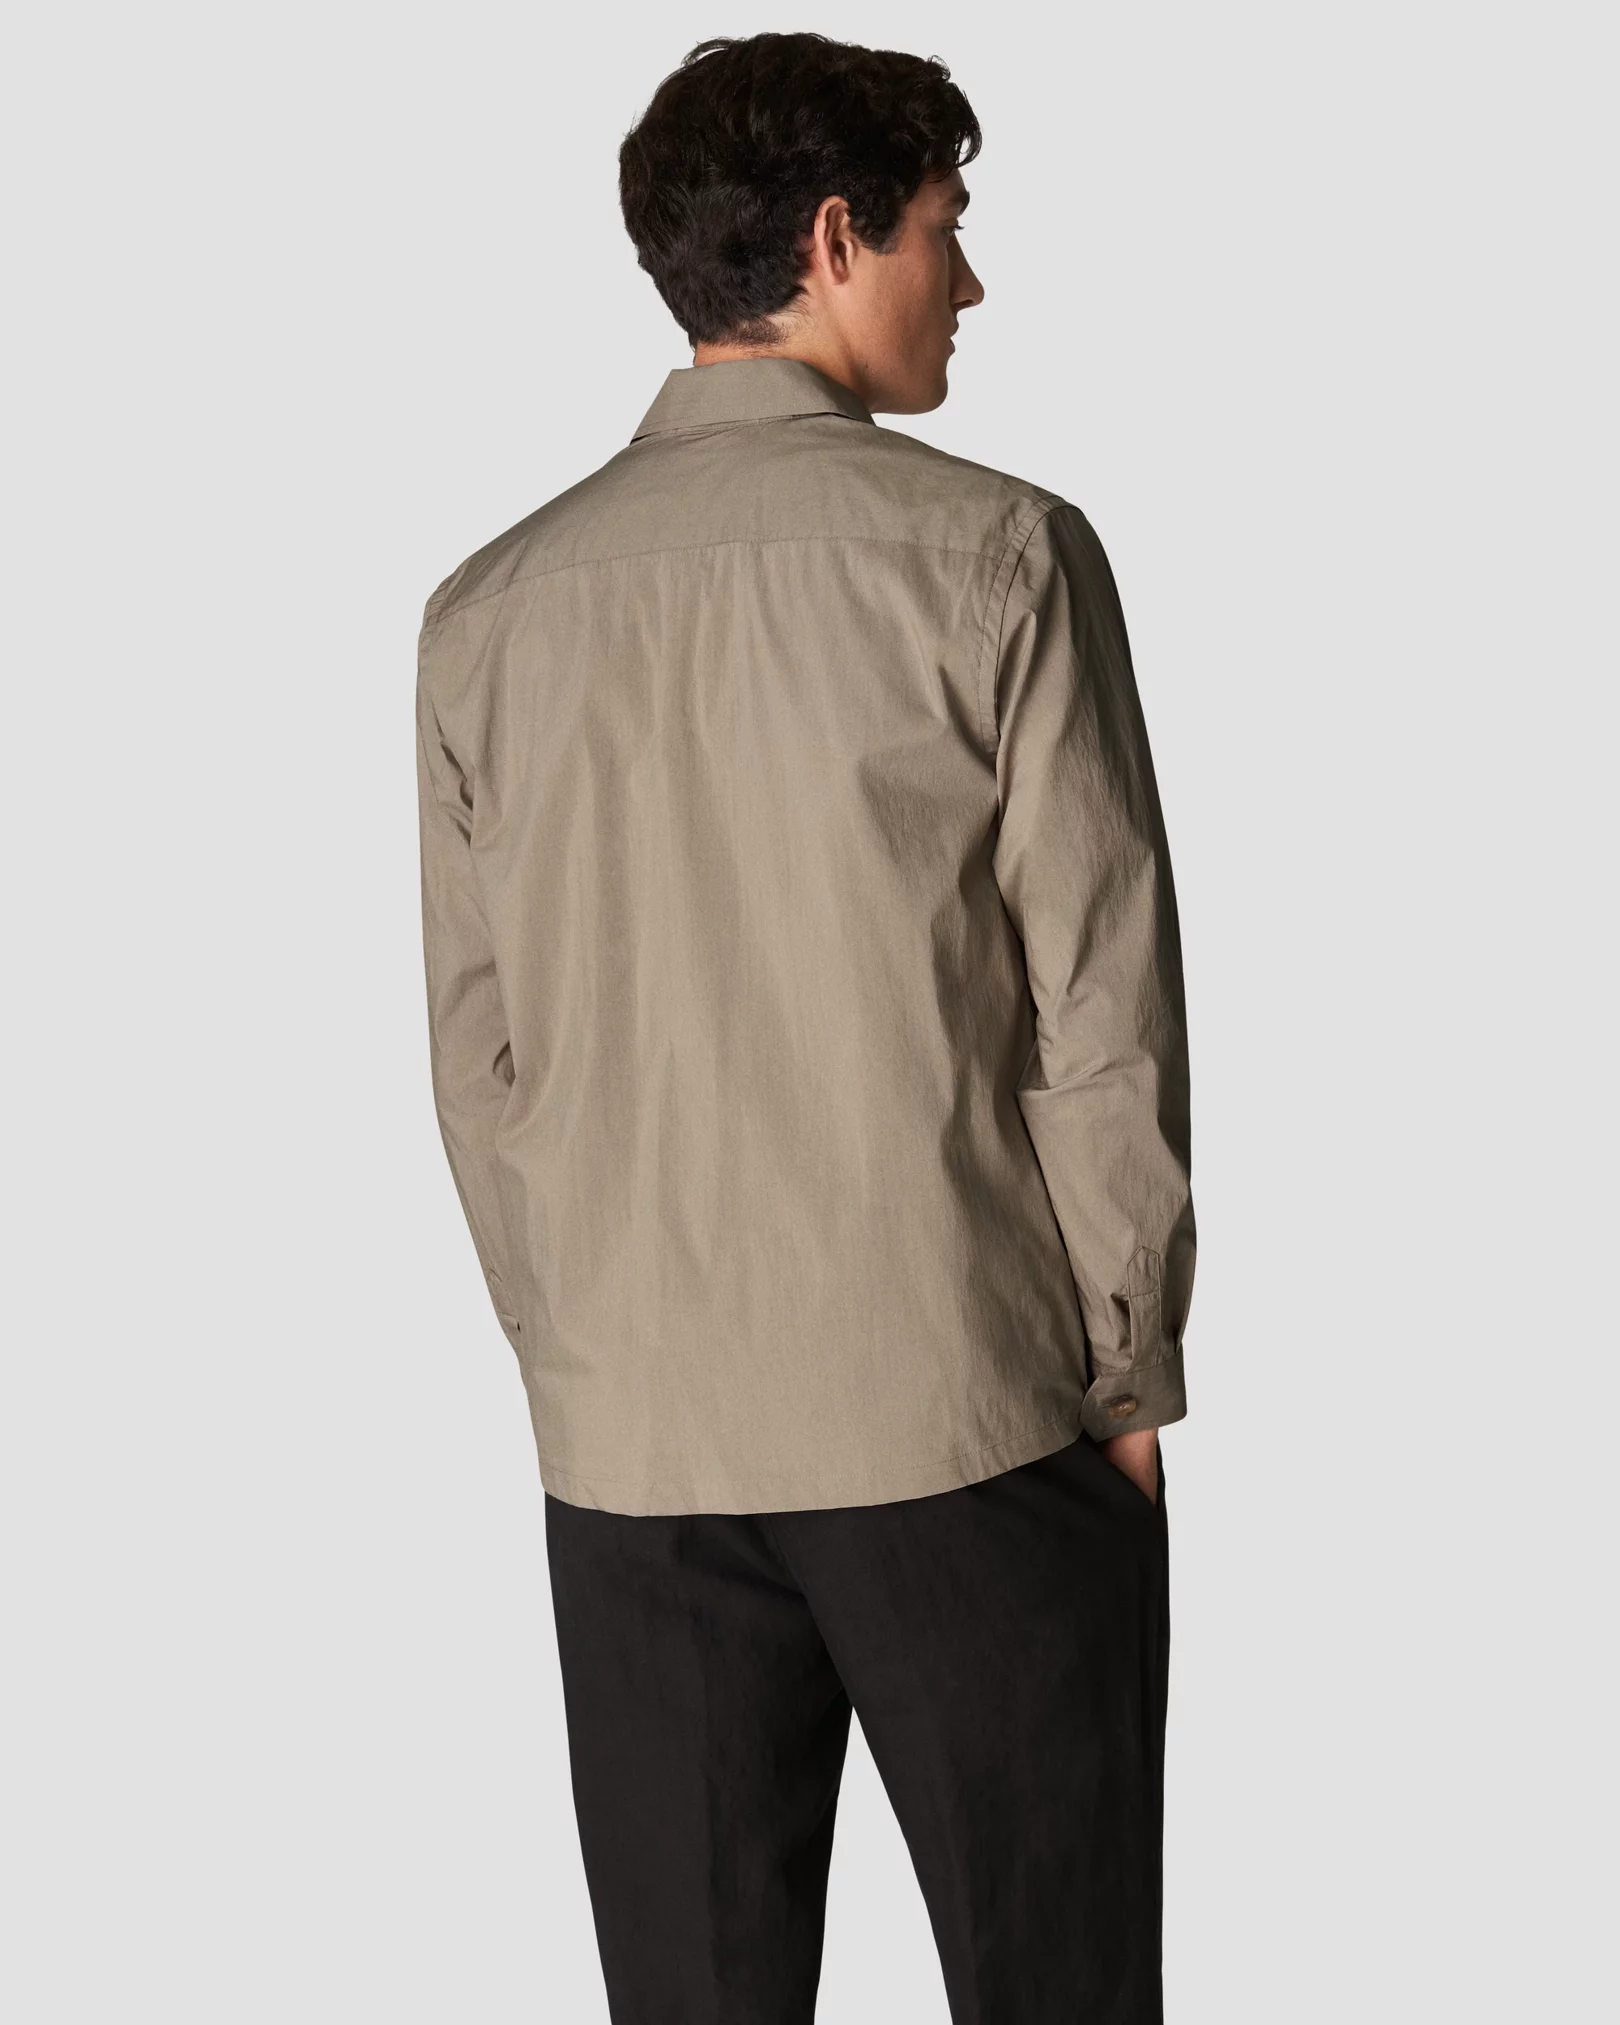 Eton - dark brown cotton and nylon overshirt